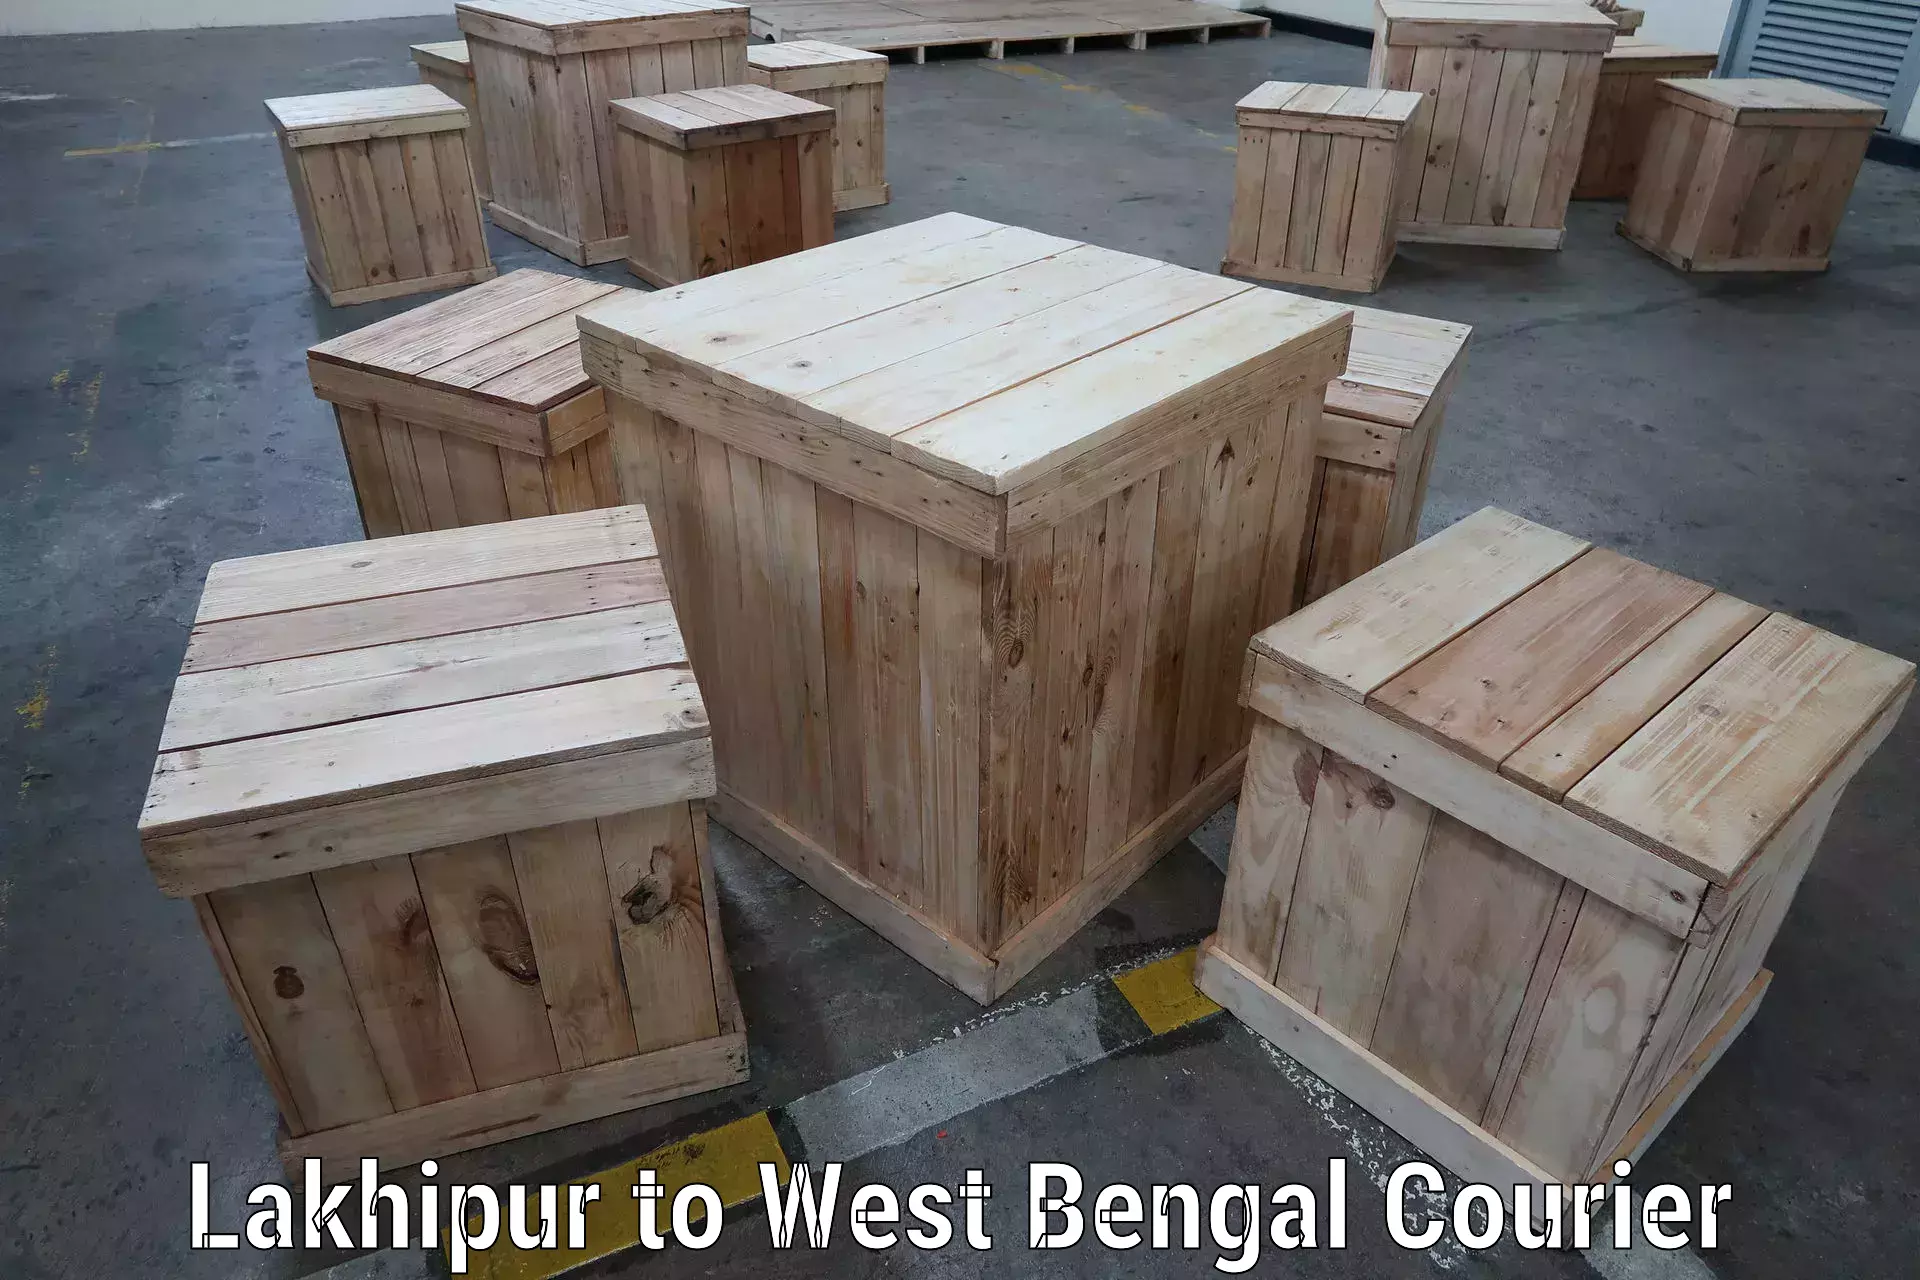 Digital courier platforms Lakhipur to West Bengal